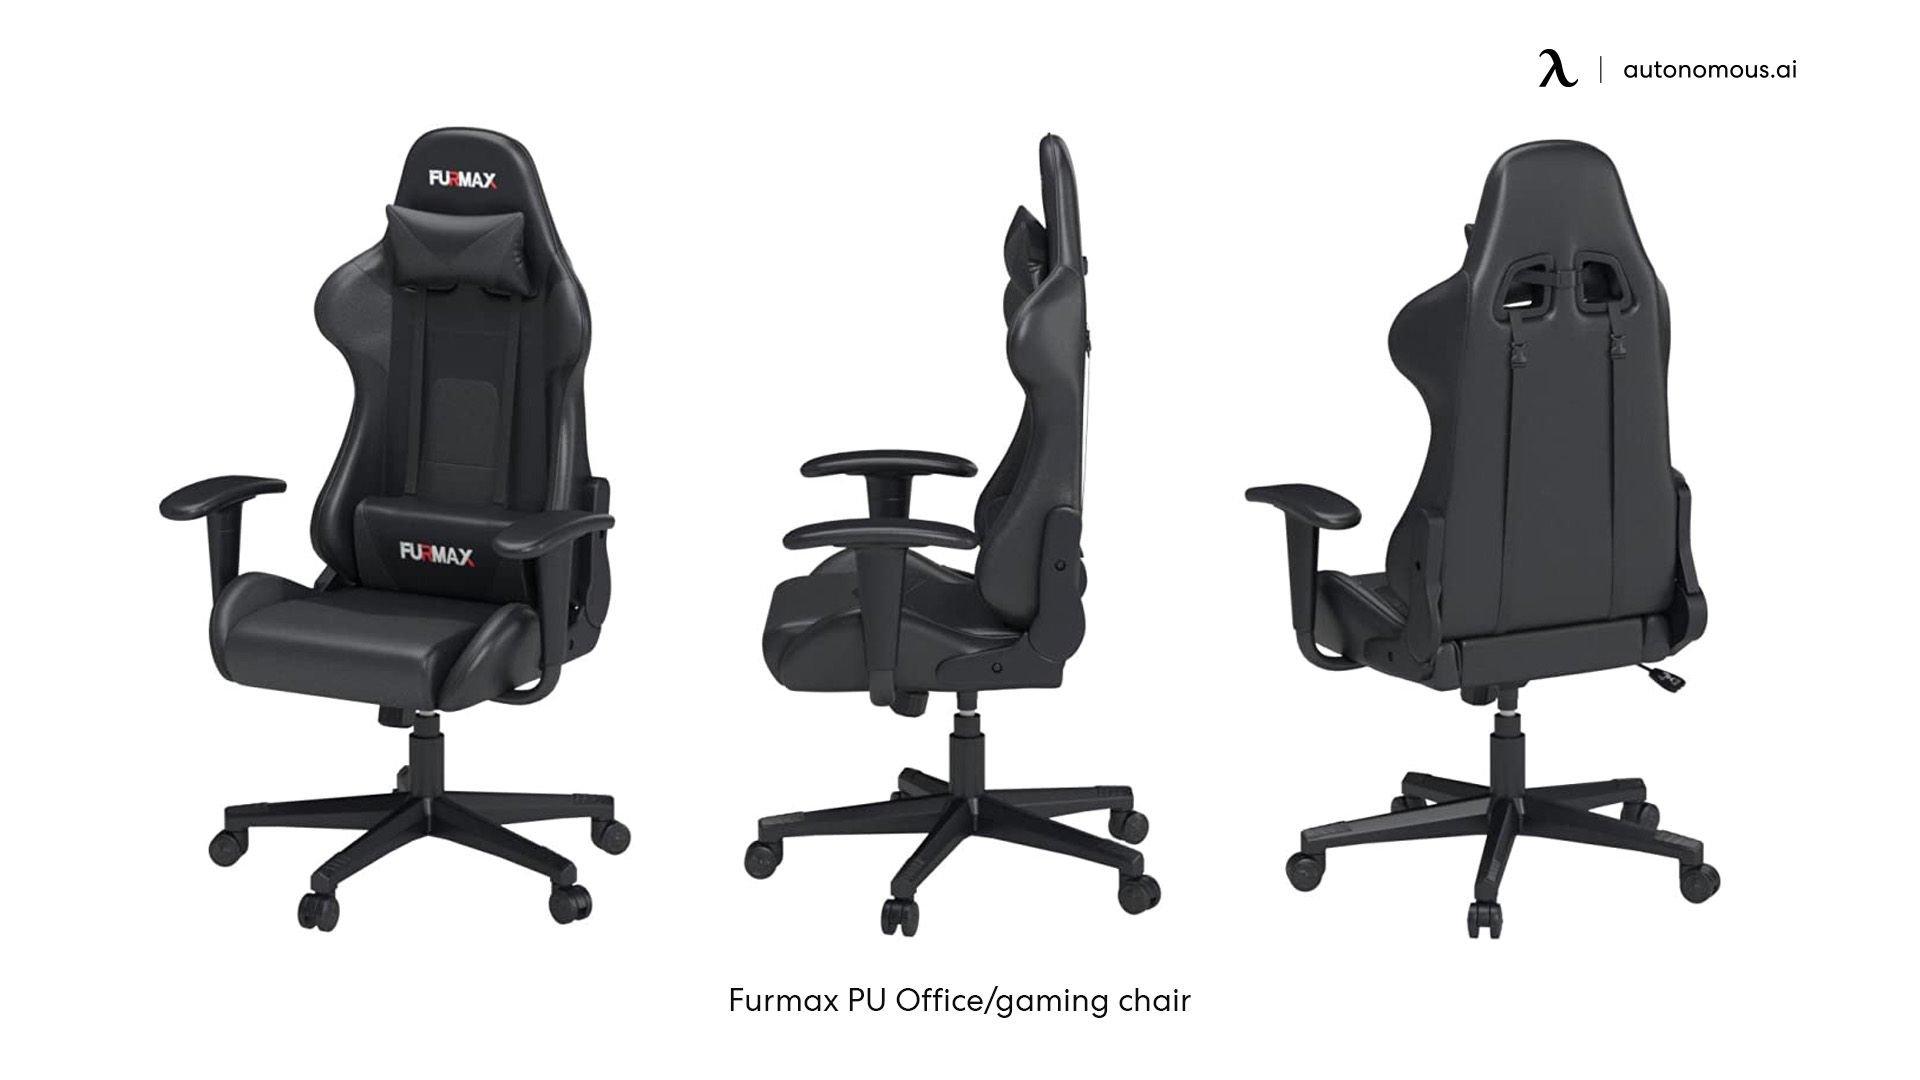 Furmax PU Office/gaming chair